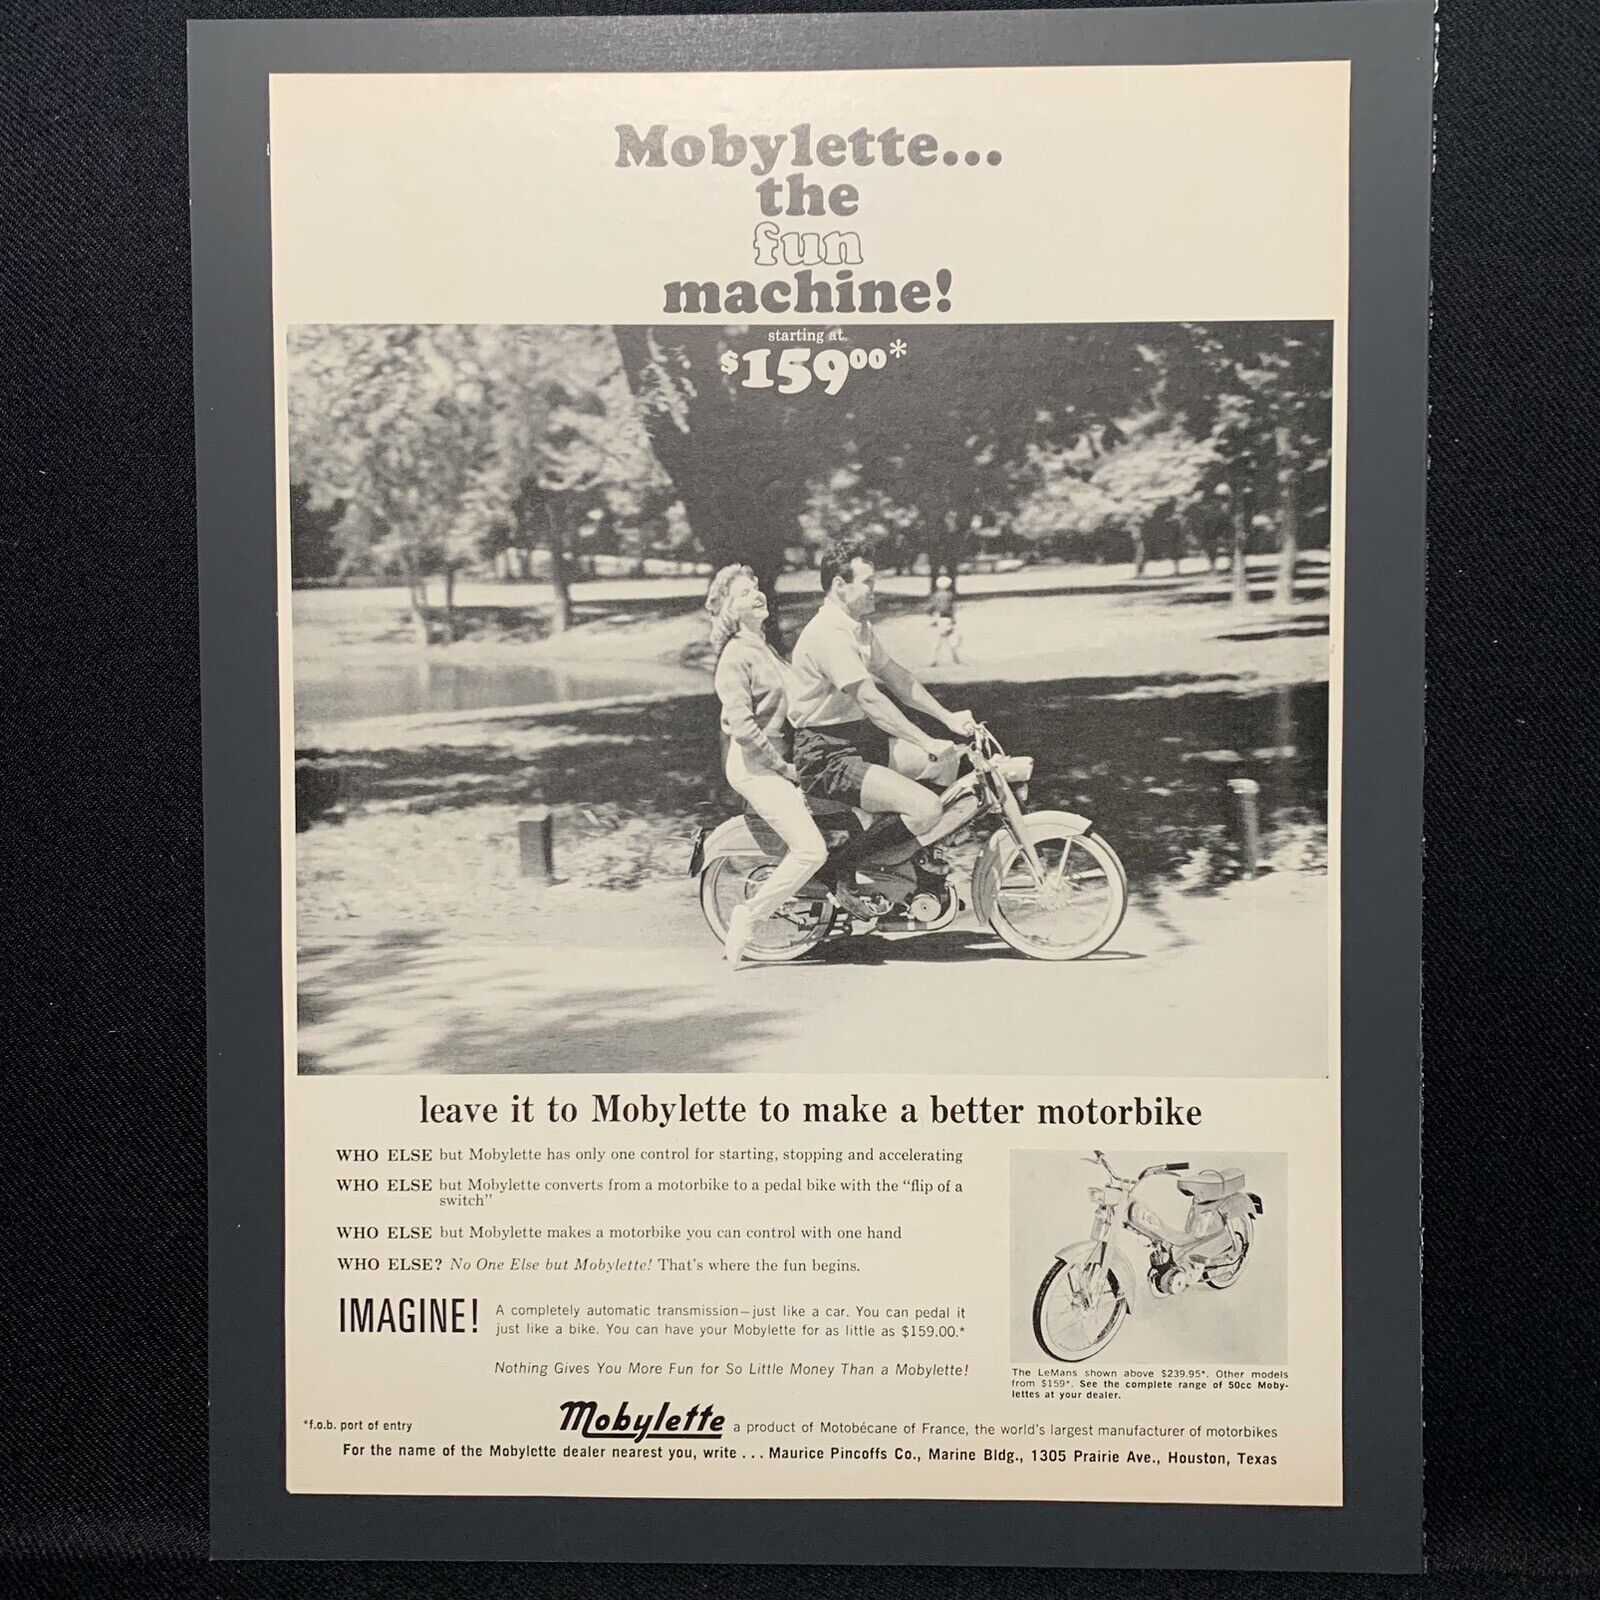 Vintage 1965 Mobylette motorbike advertisement